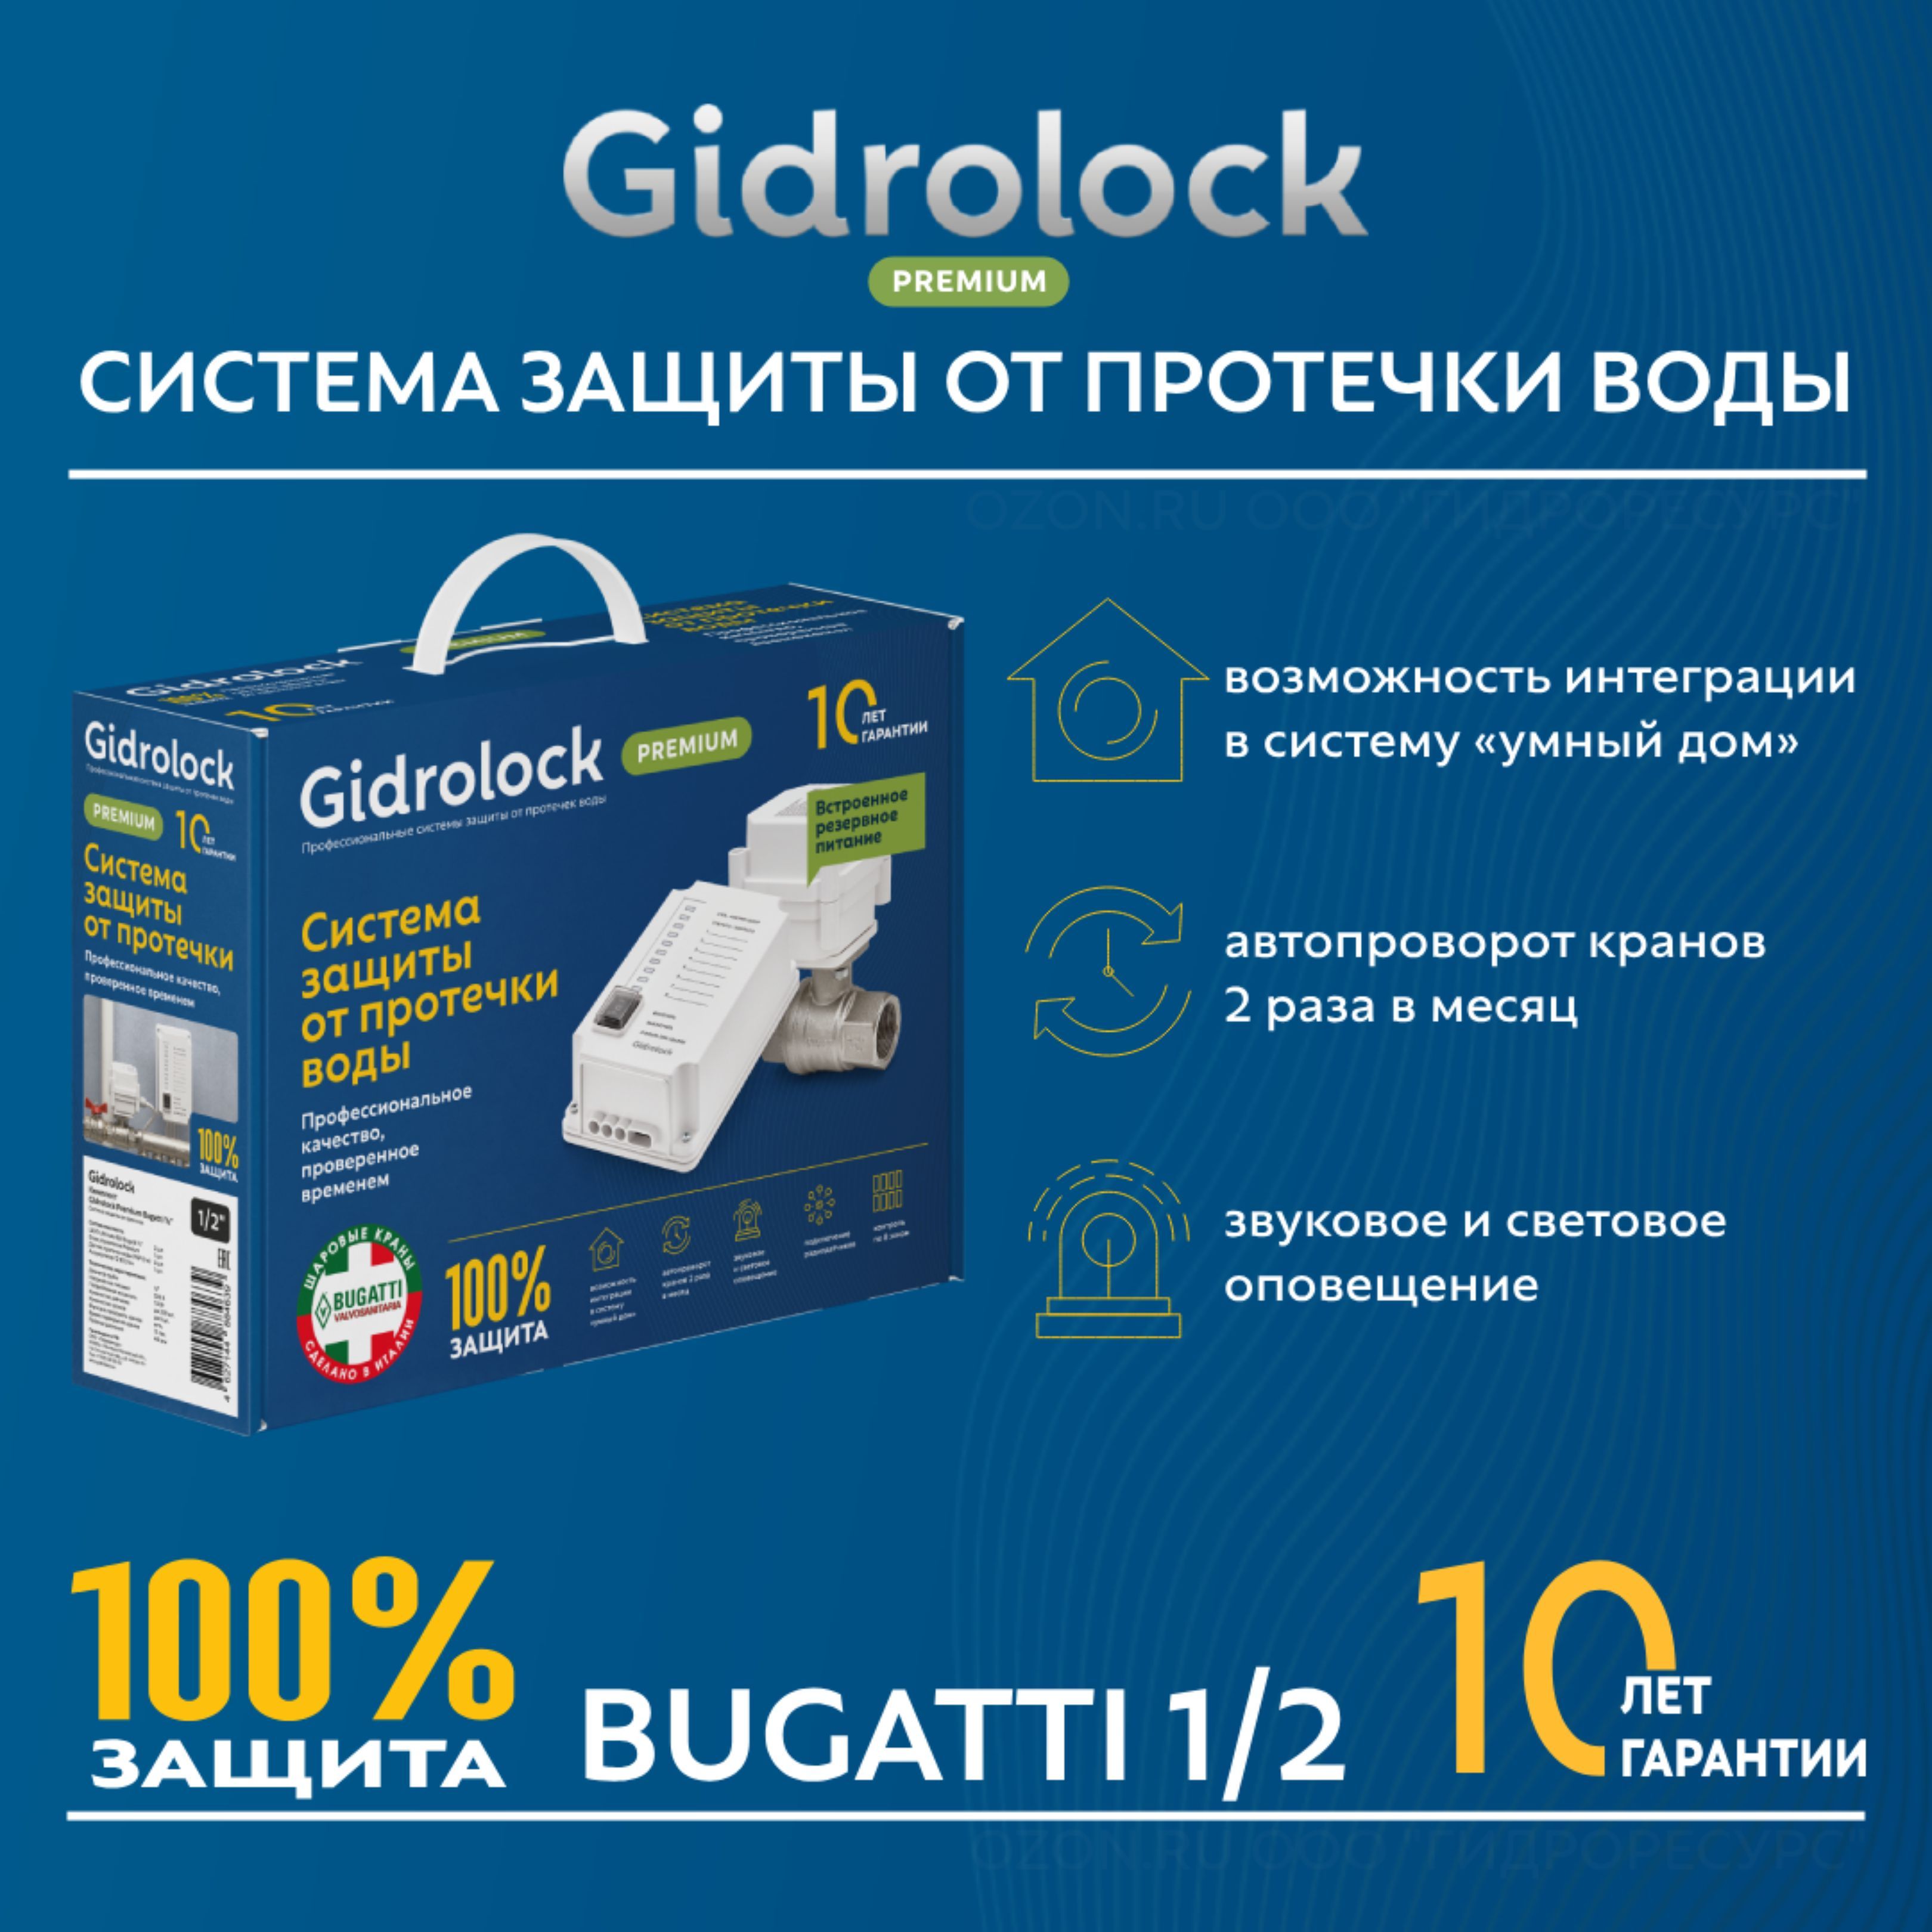 Gidrolock bugatti 1 2